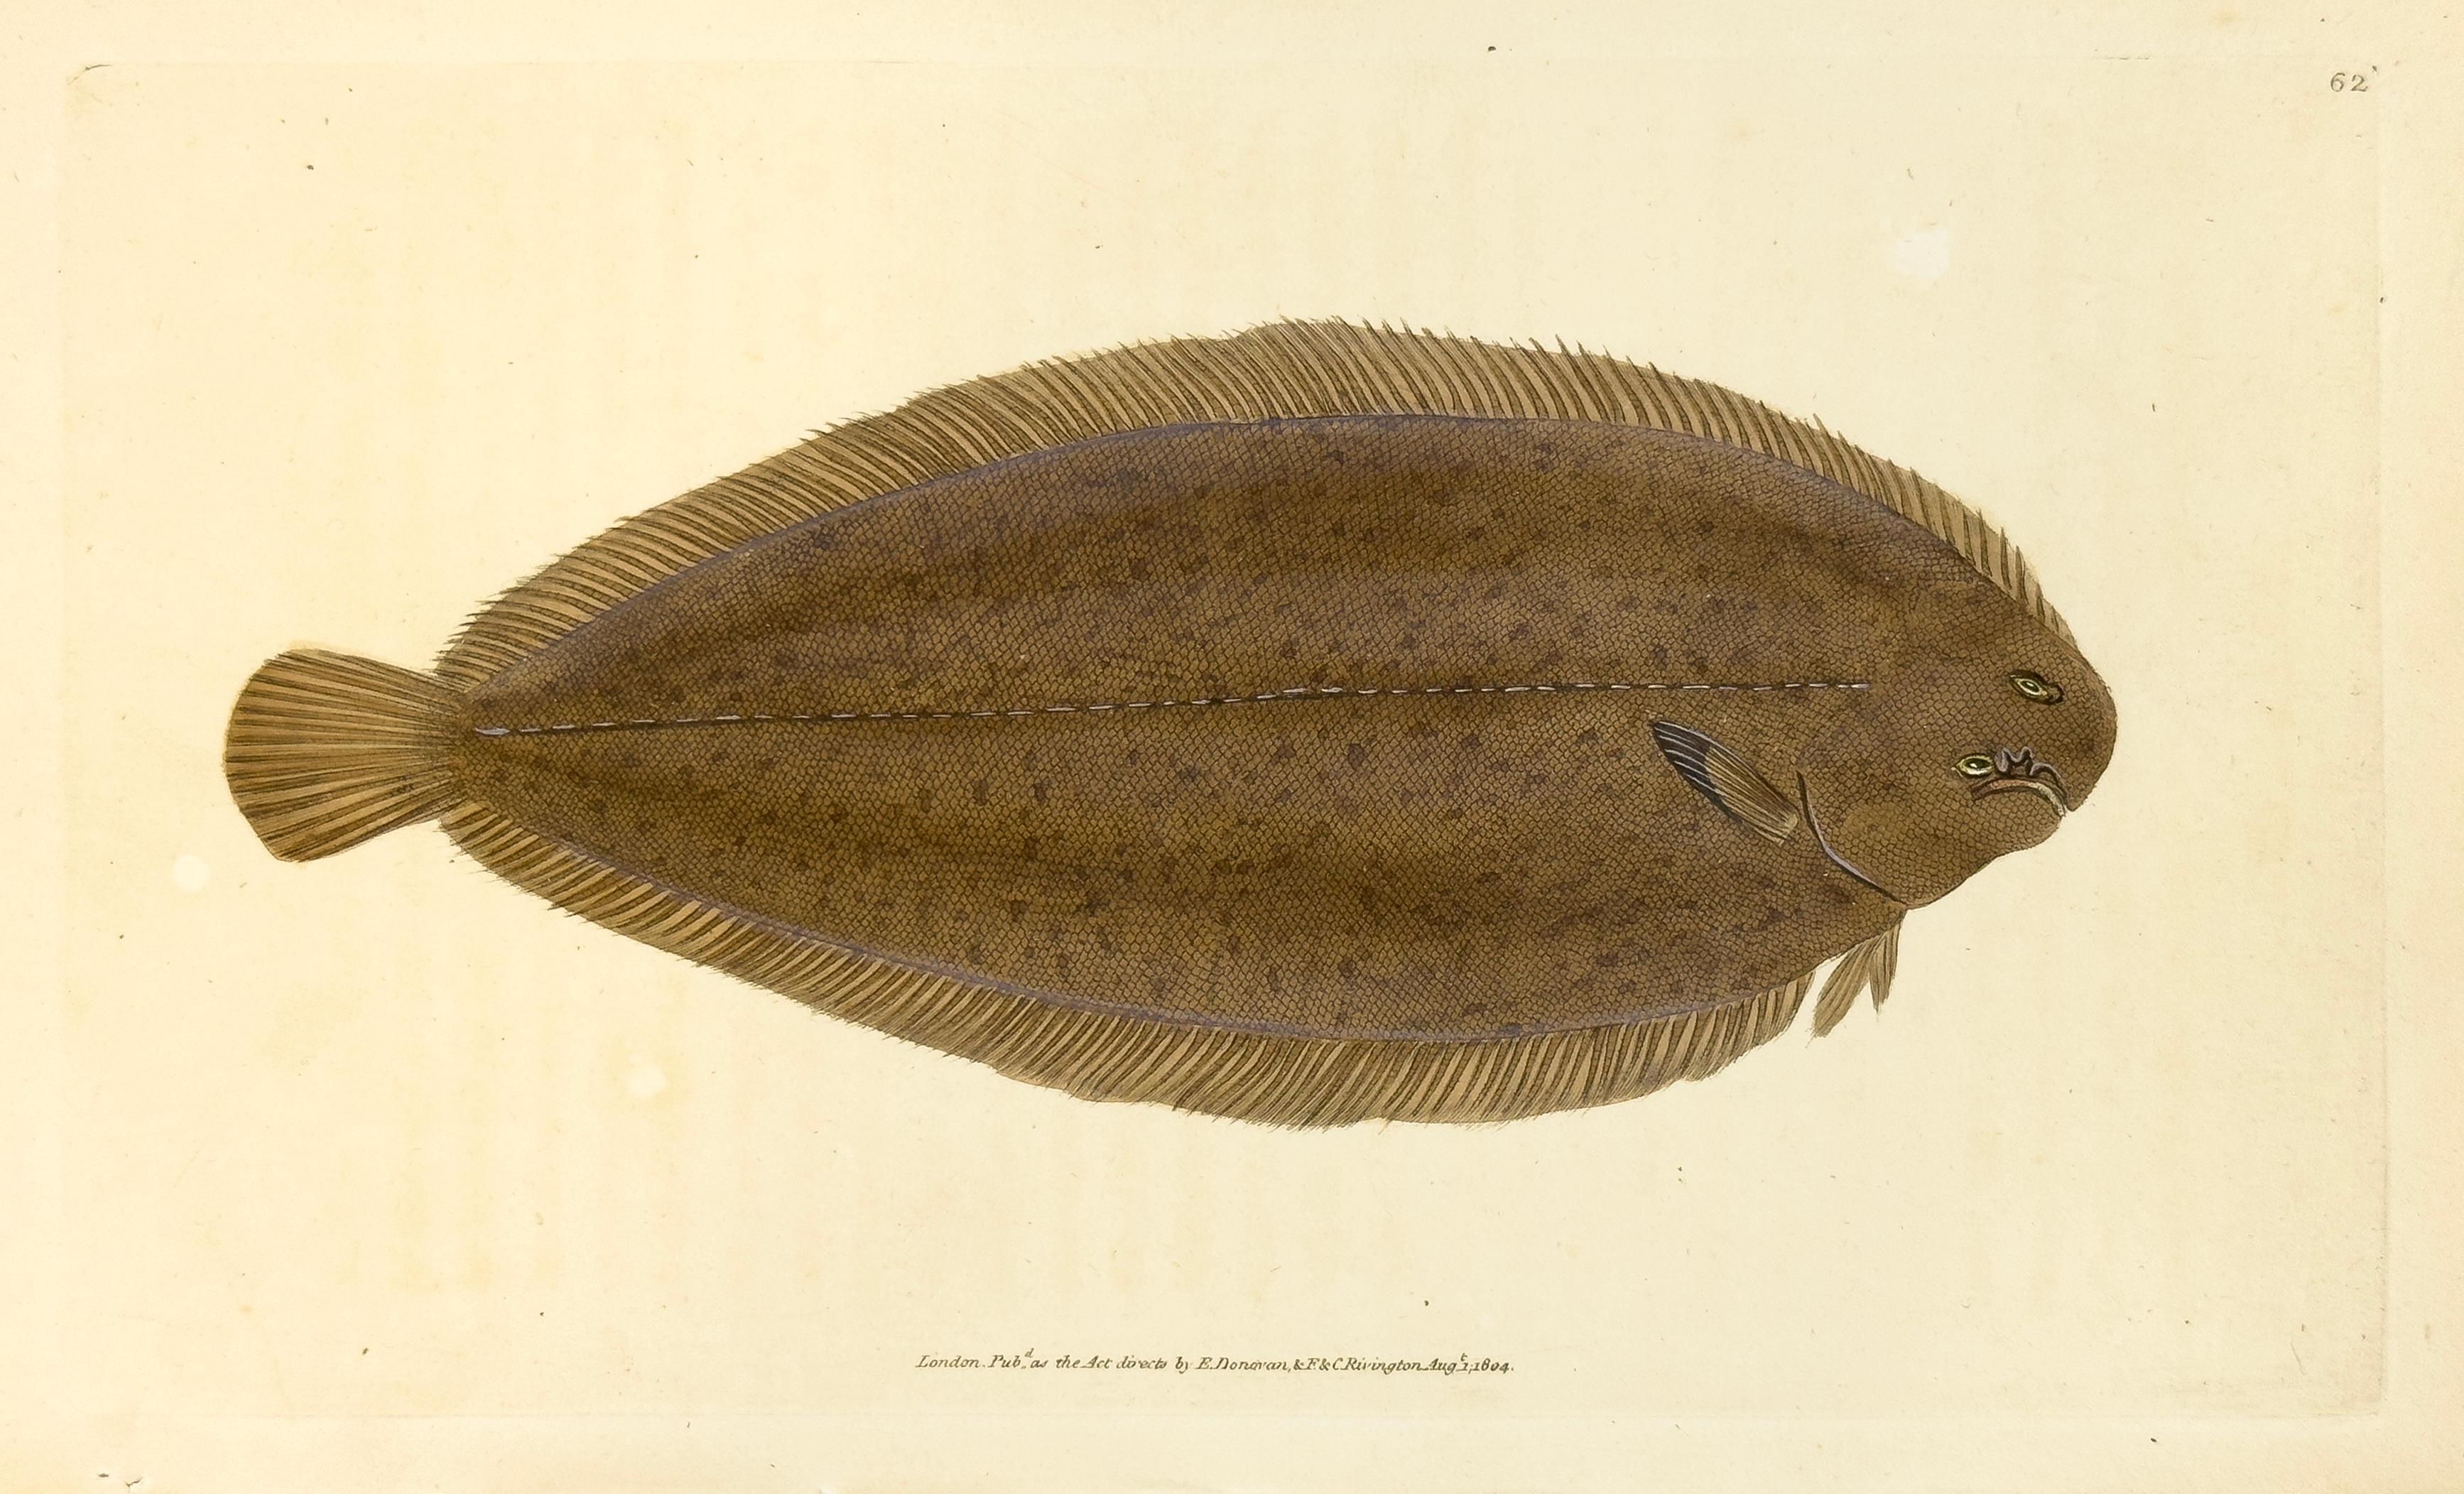 Edward Donovan Animal Print – 62: Pleuronectes solea, Seezunge